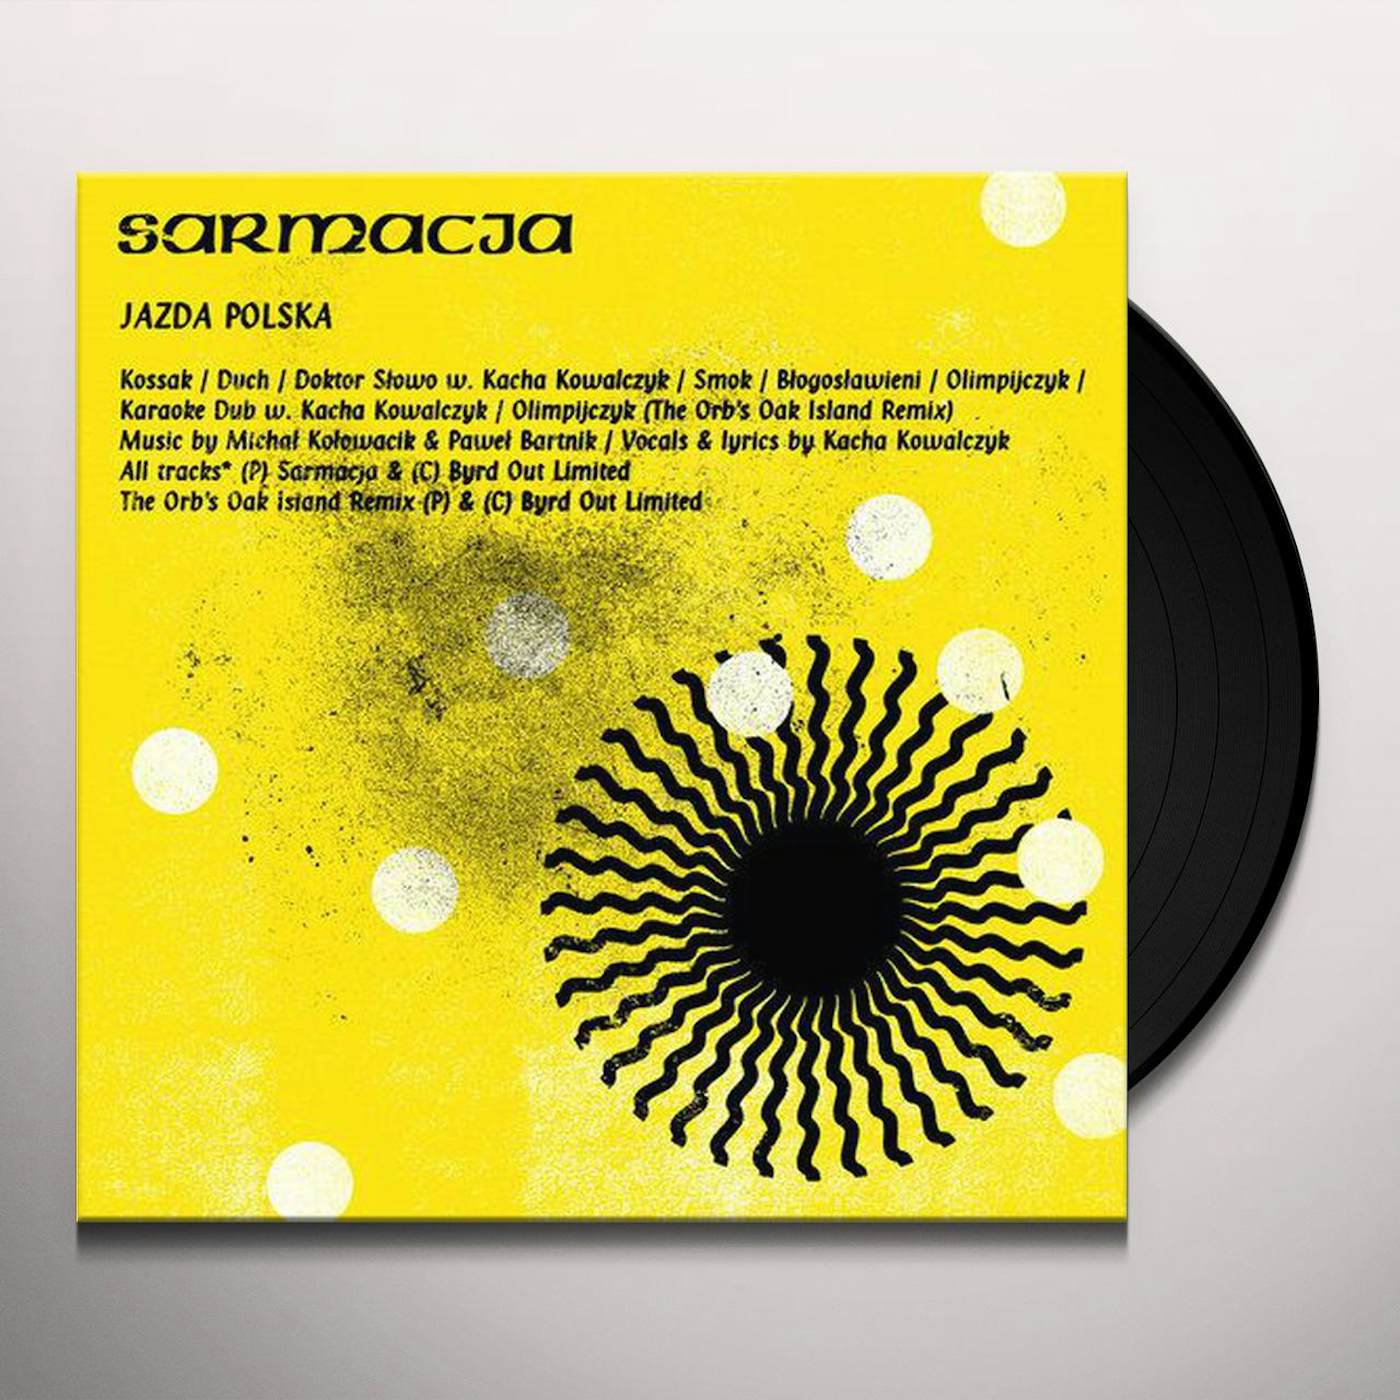 Sarmacja Jazda Polska Vinyl Record